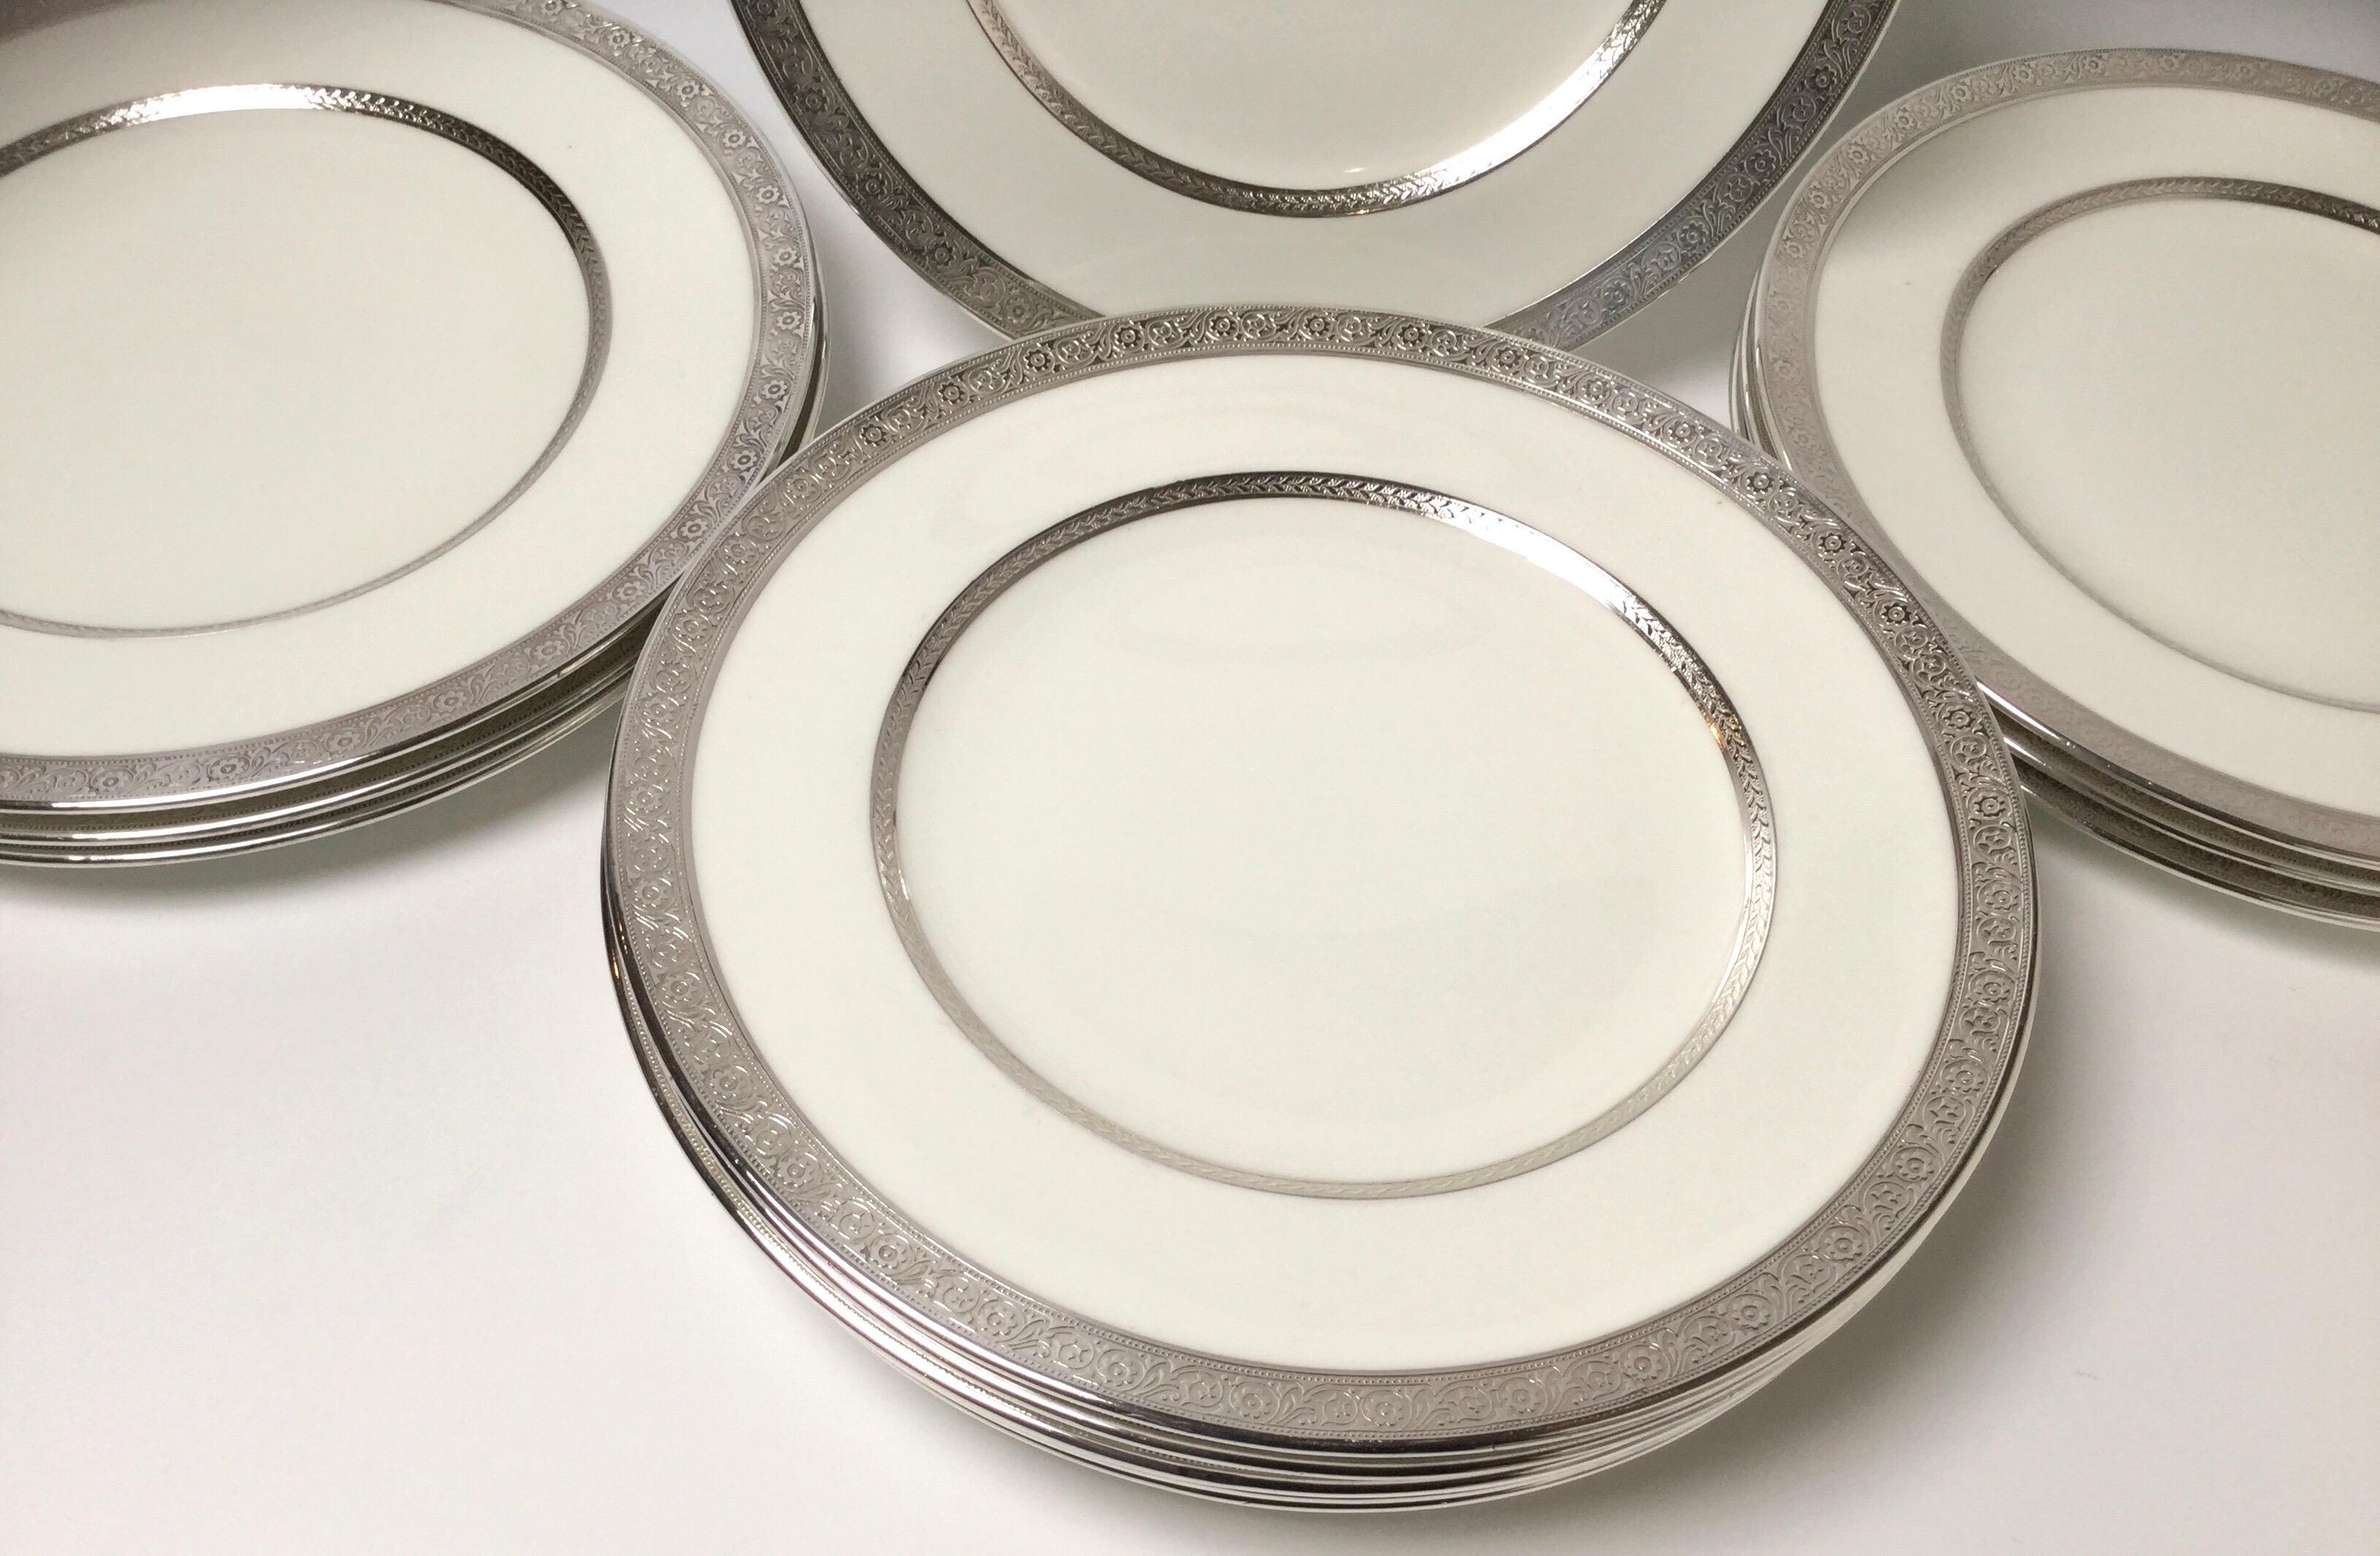 Set of Twelve Sterling Overlay Service Dinner Plates by Cauldon 1